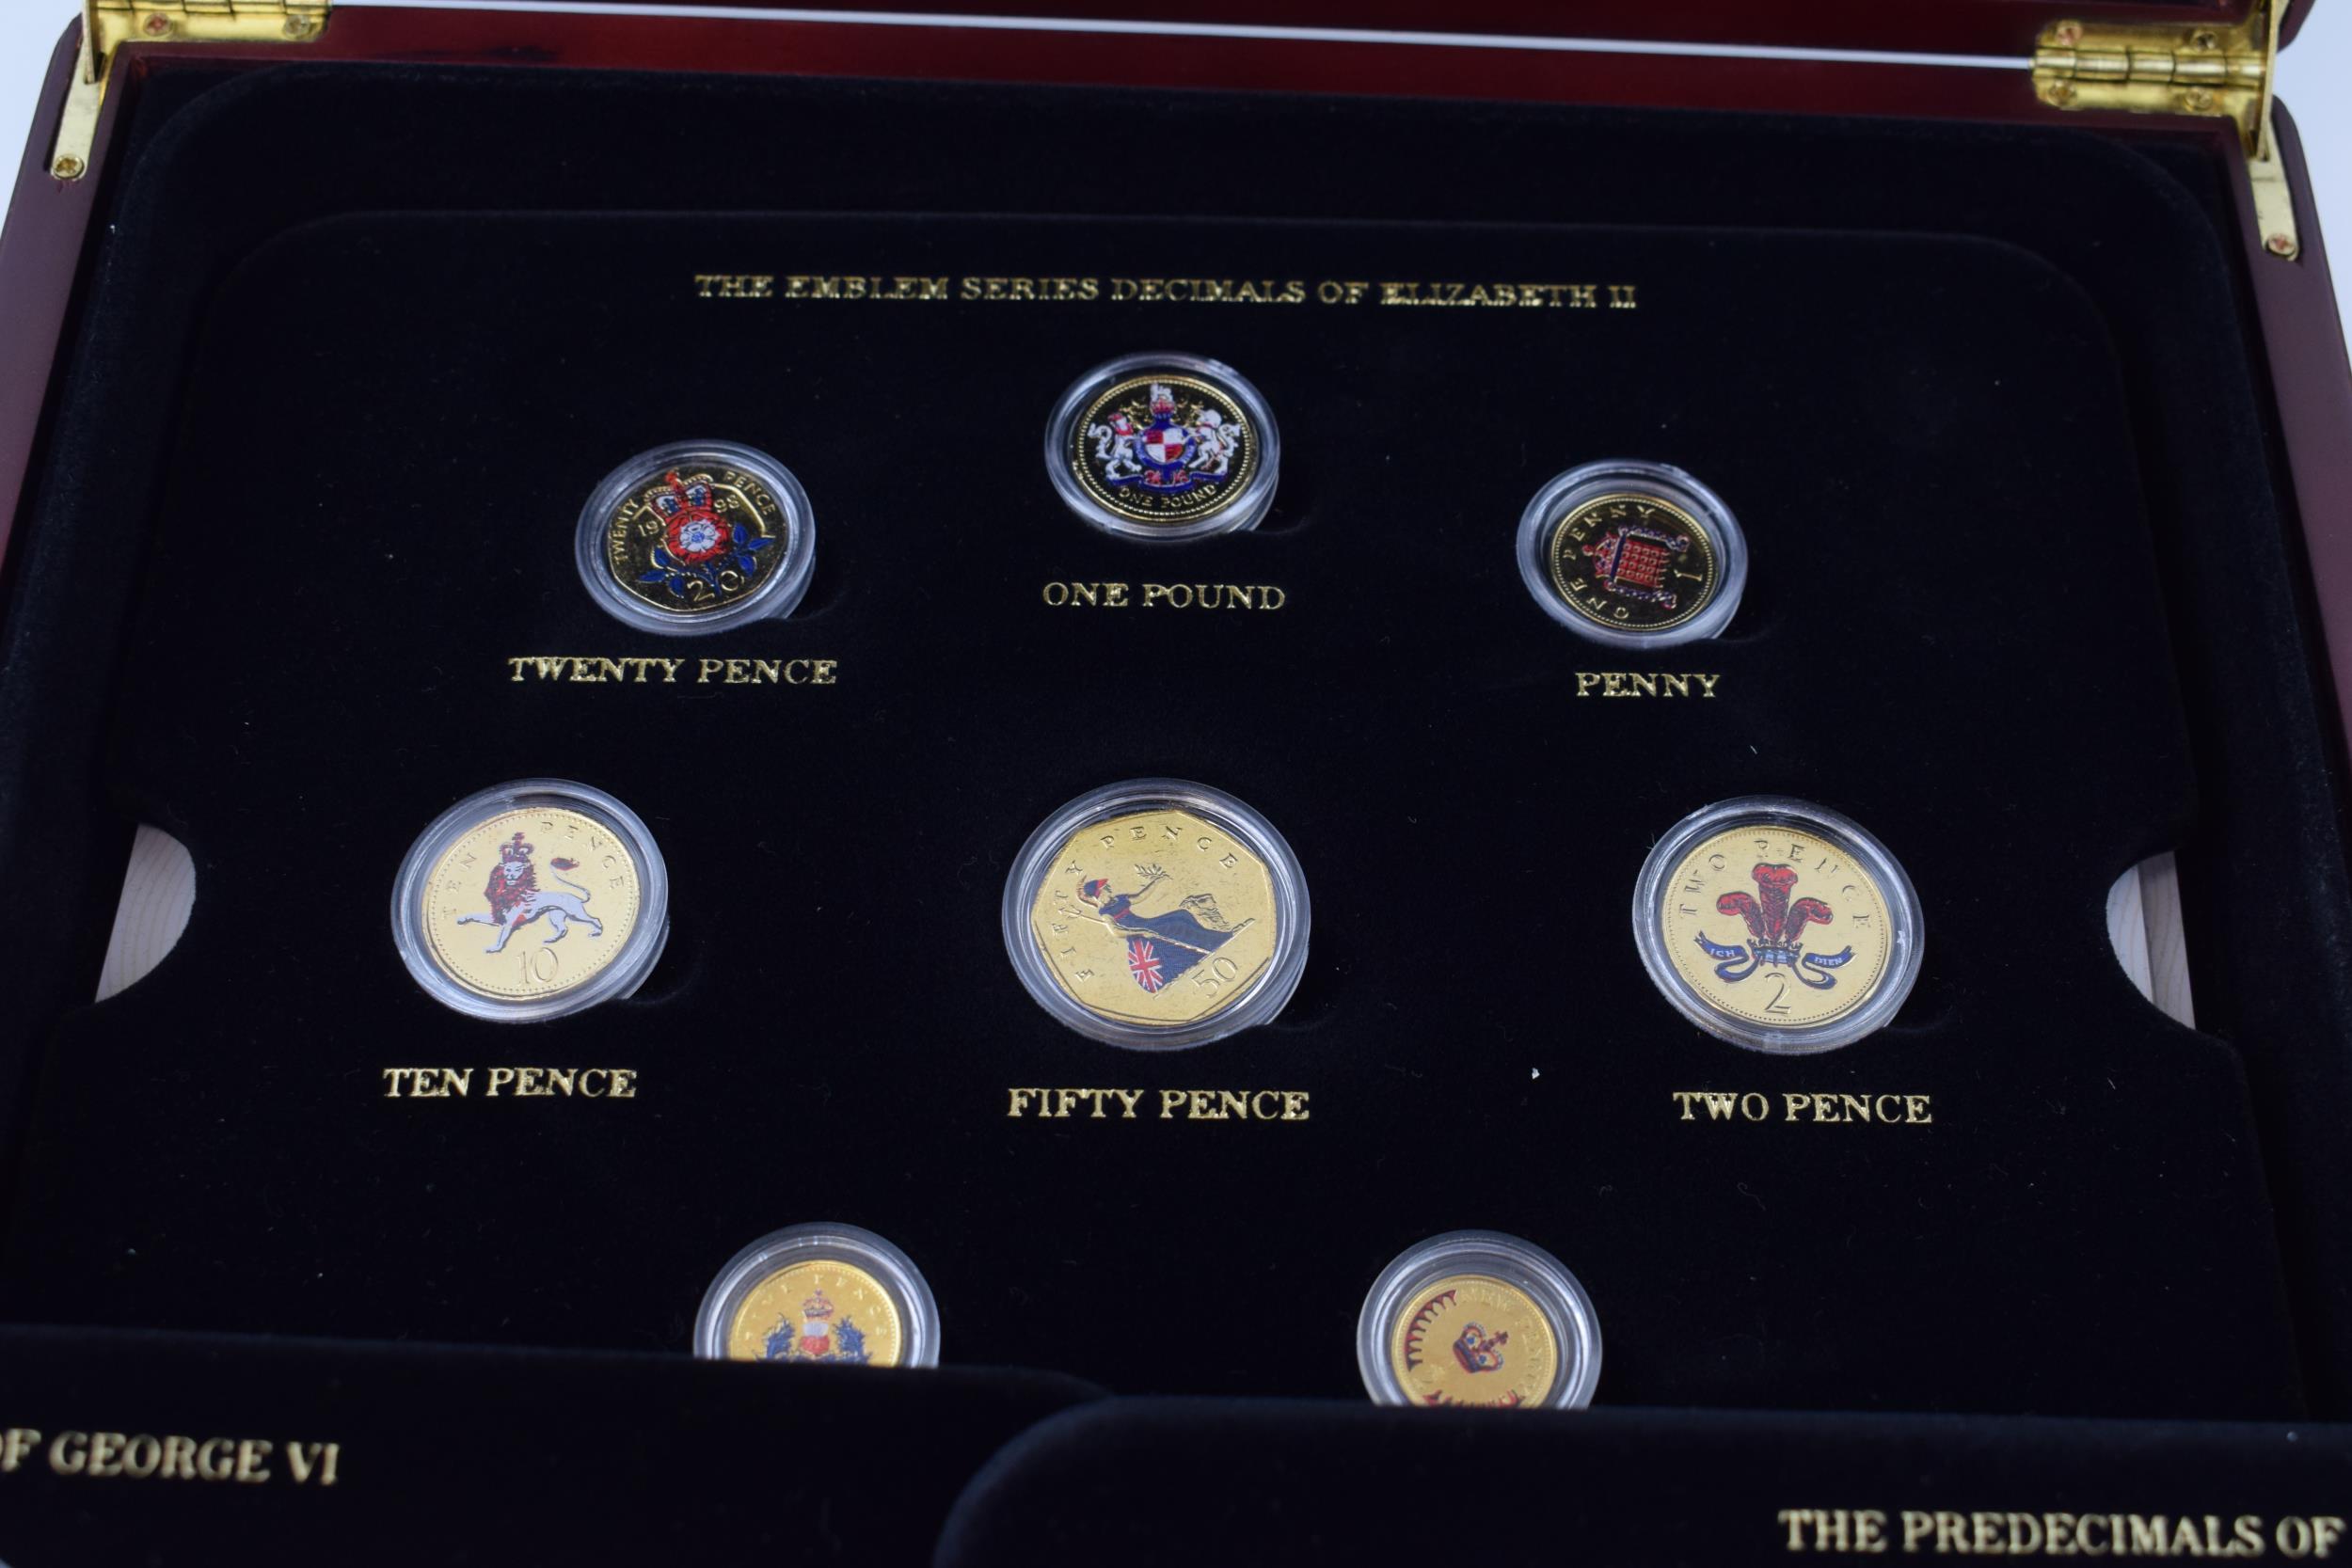 18 commemorative coin collection, the predecimals of George VI and the predecimals of Elizabeth - Image 4 of 6